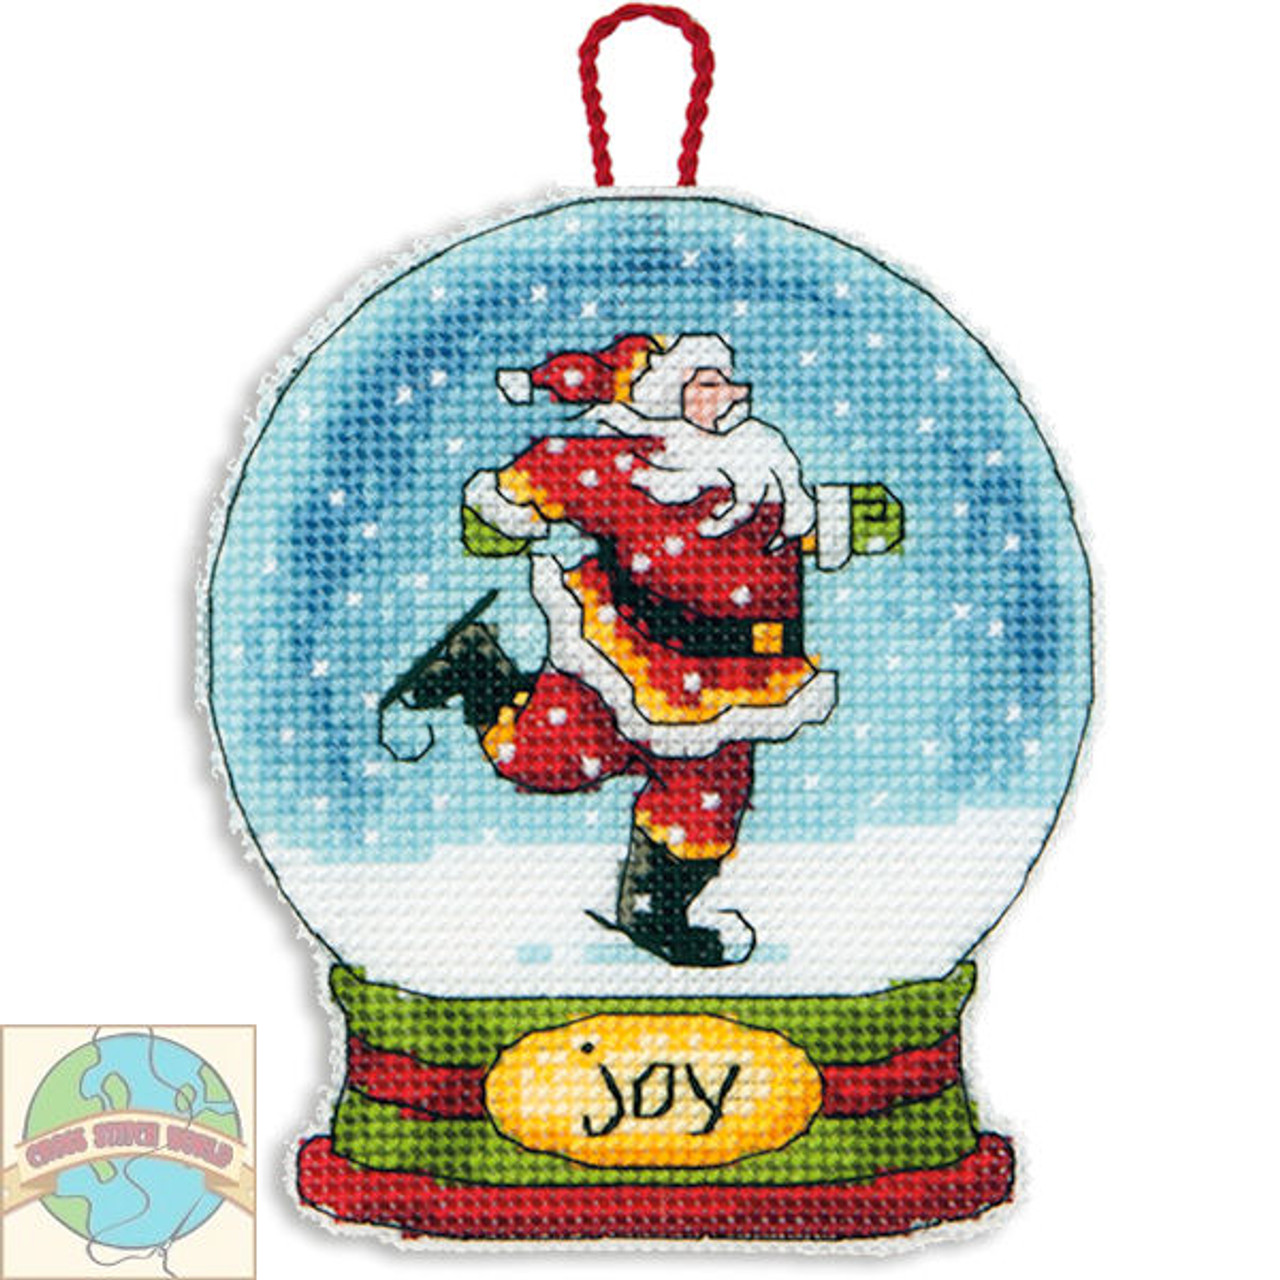 Dimensions Joy Snowglobe Counted Cross Stitch Kit-3.75X4.5 14 Count Plastic